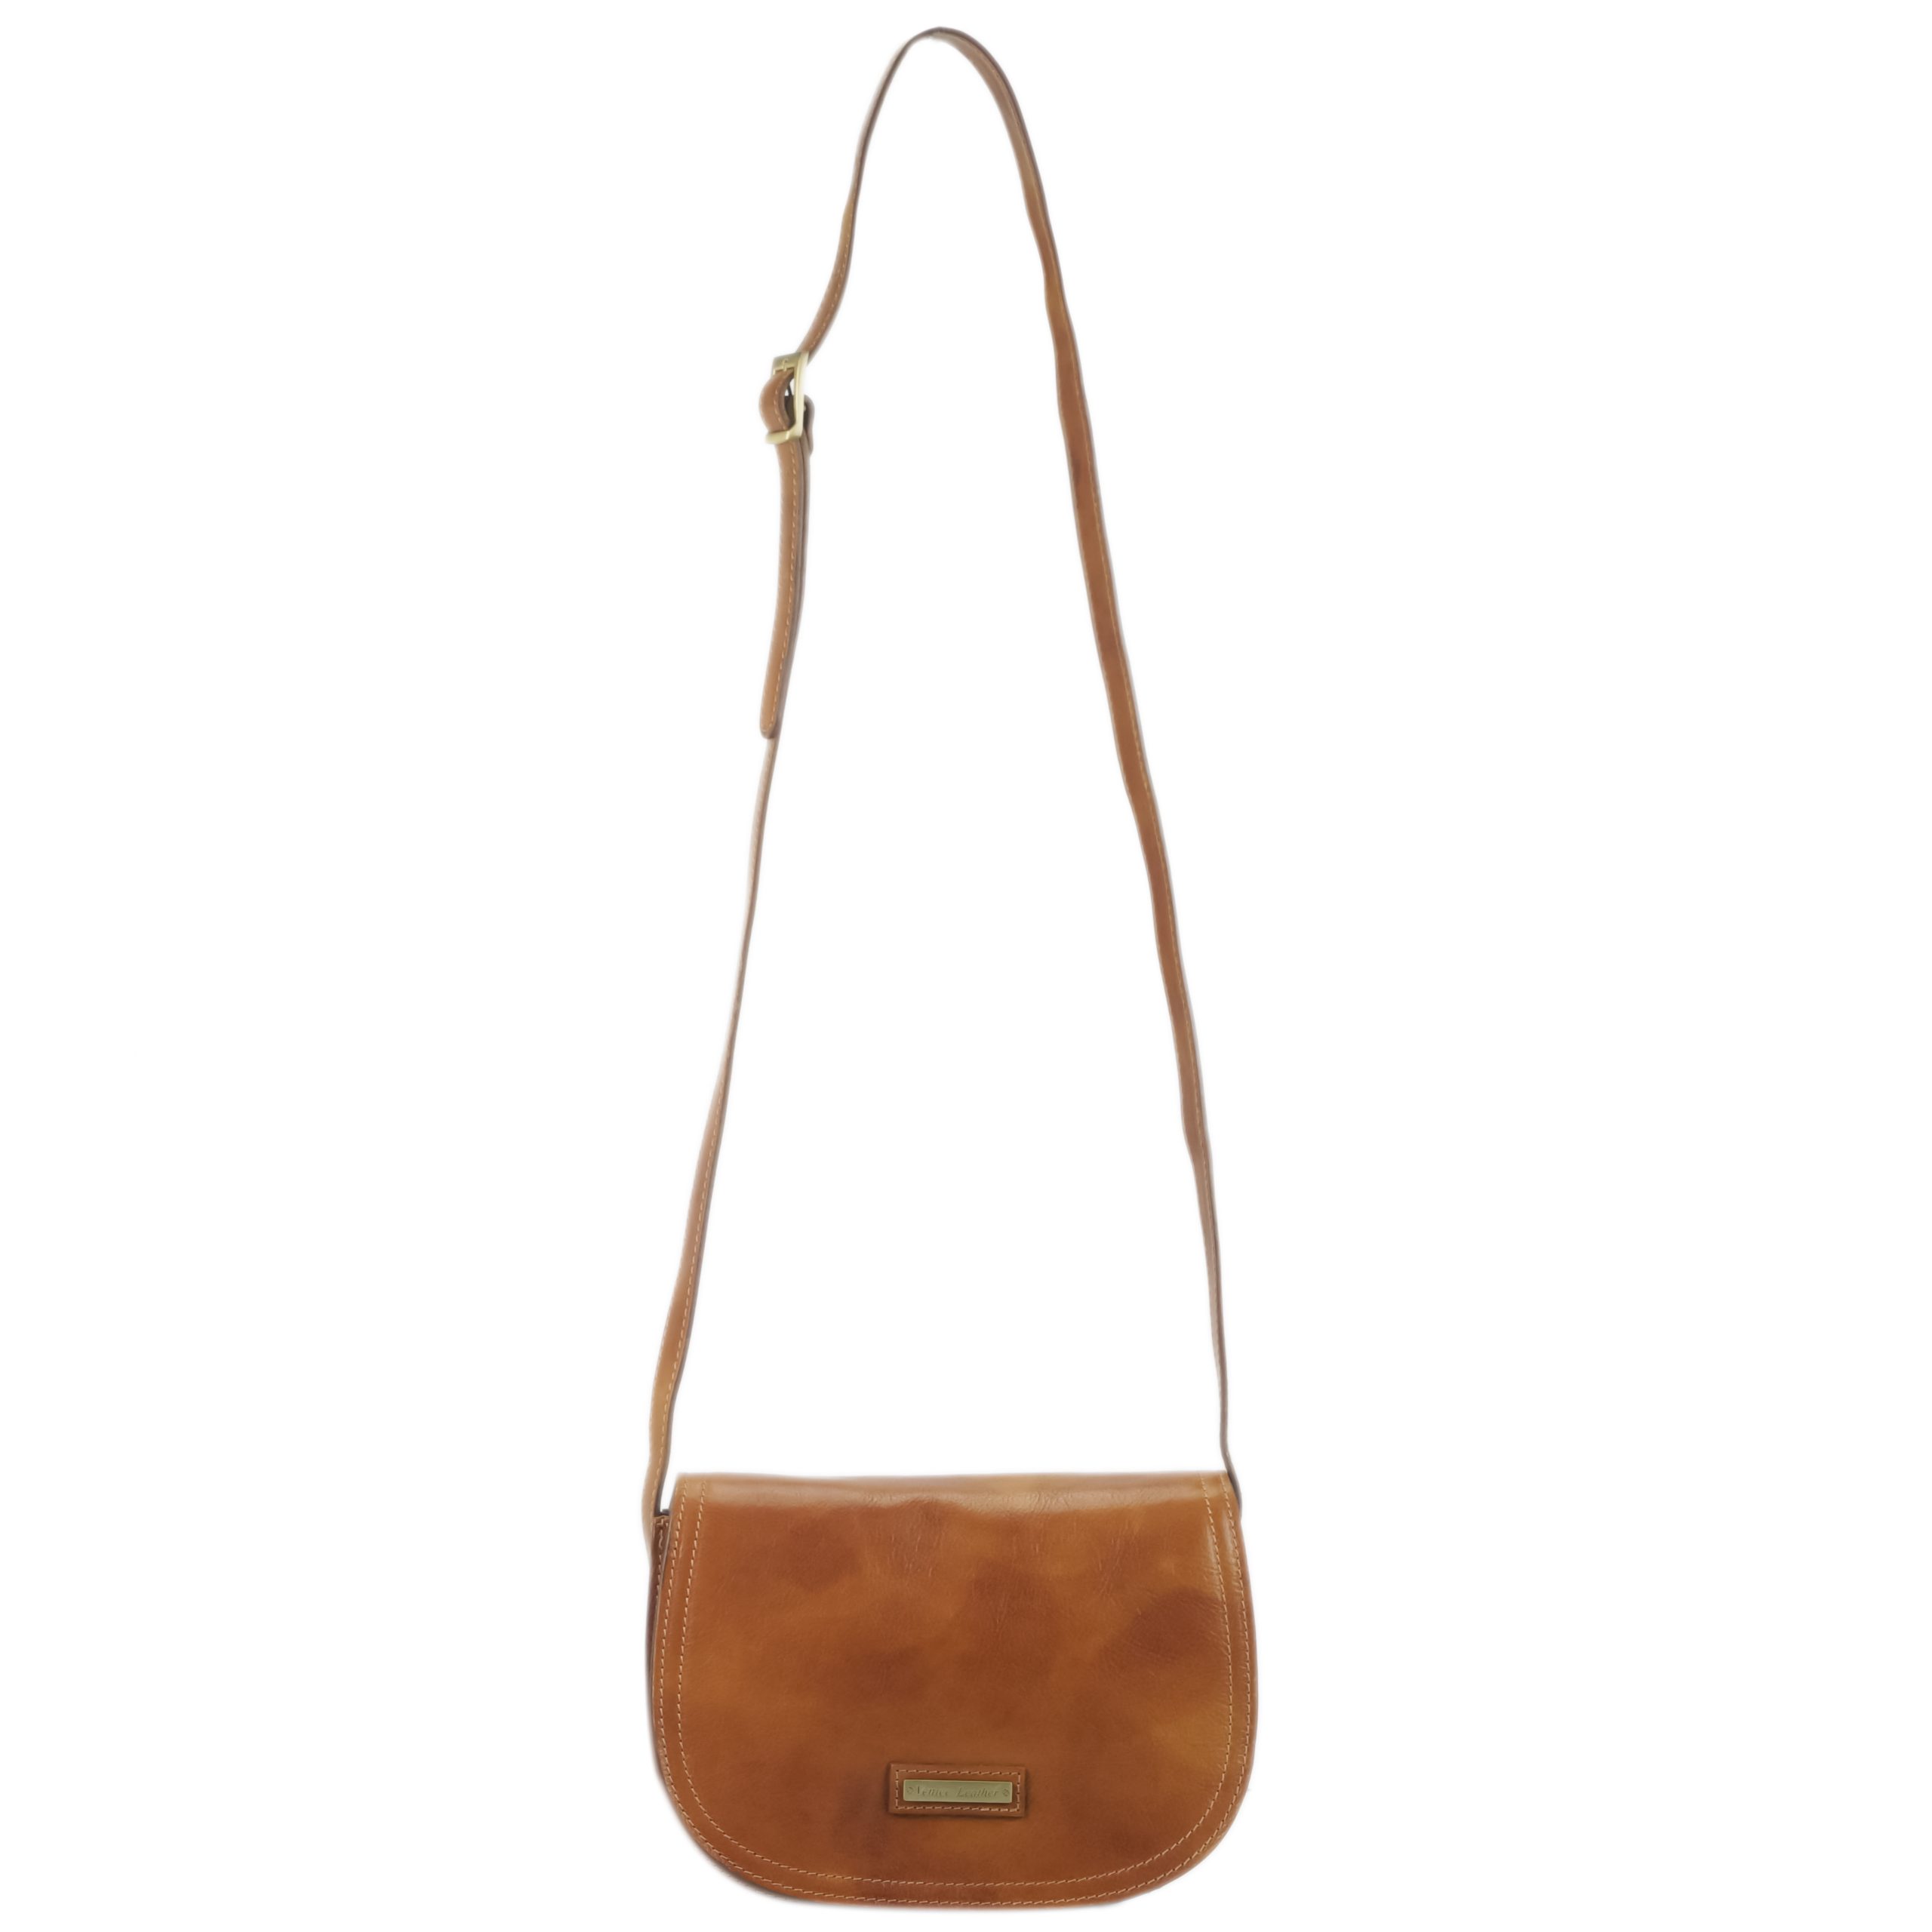 Small Italian Leather Cross Body Bag Brown/Cognac - 8106019